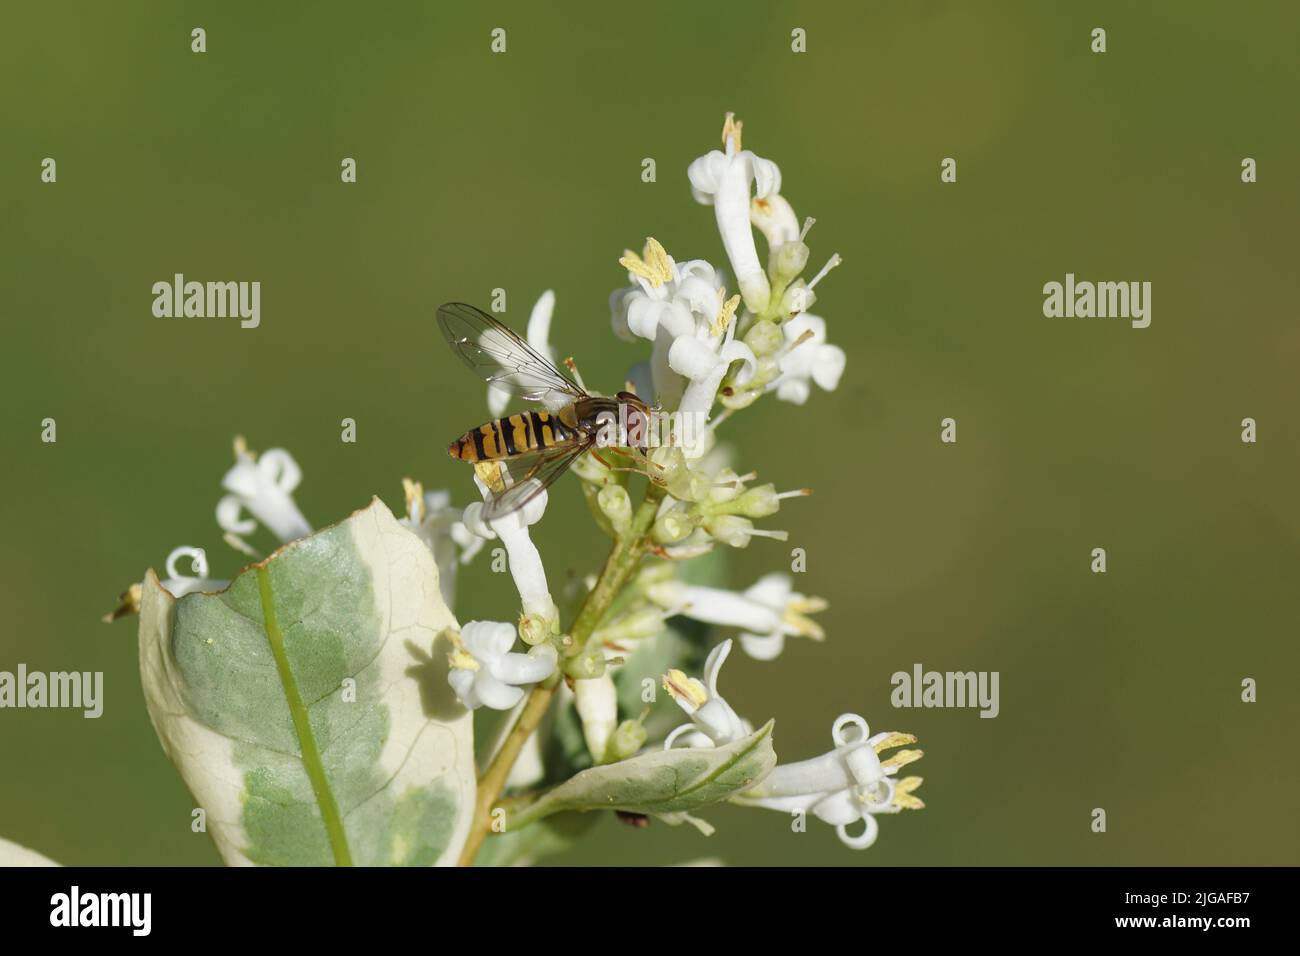 Female marmalade fly (Episyrphus balteatus), family hoverflies (Syrphidae) on white flowers of Silver privet (Ligustrum ovalifolium 'Variegatum'), Stock Photo